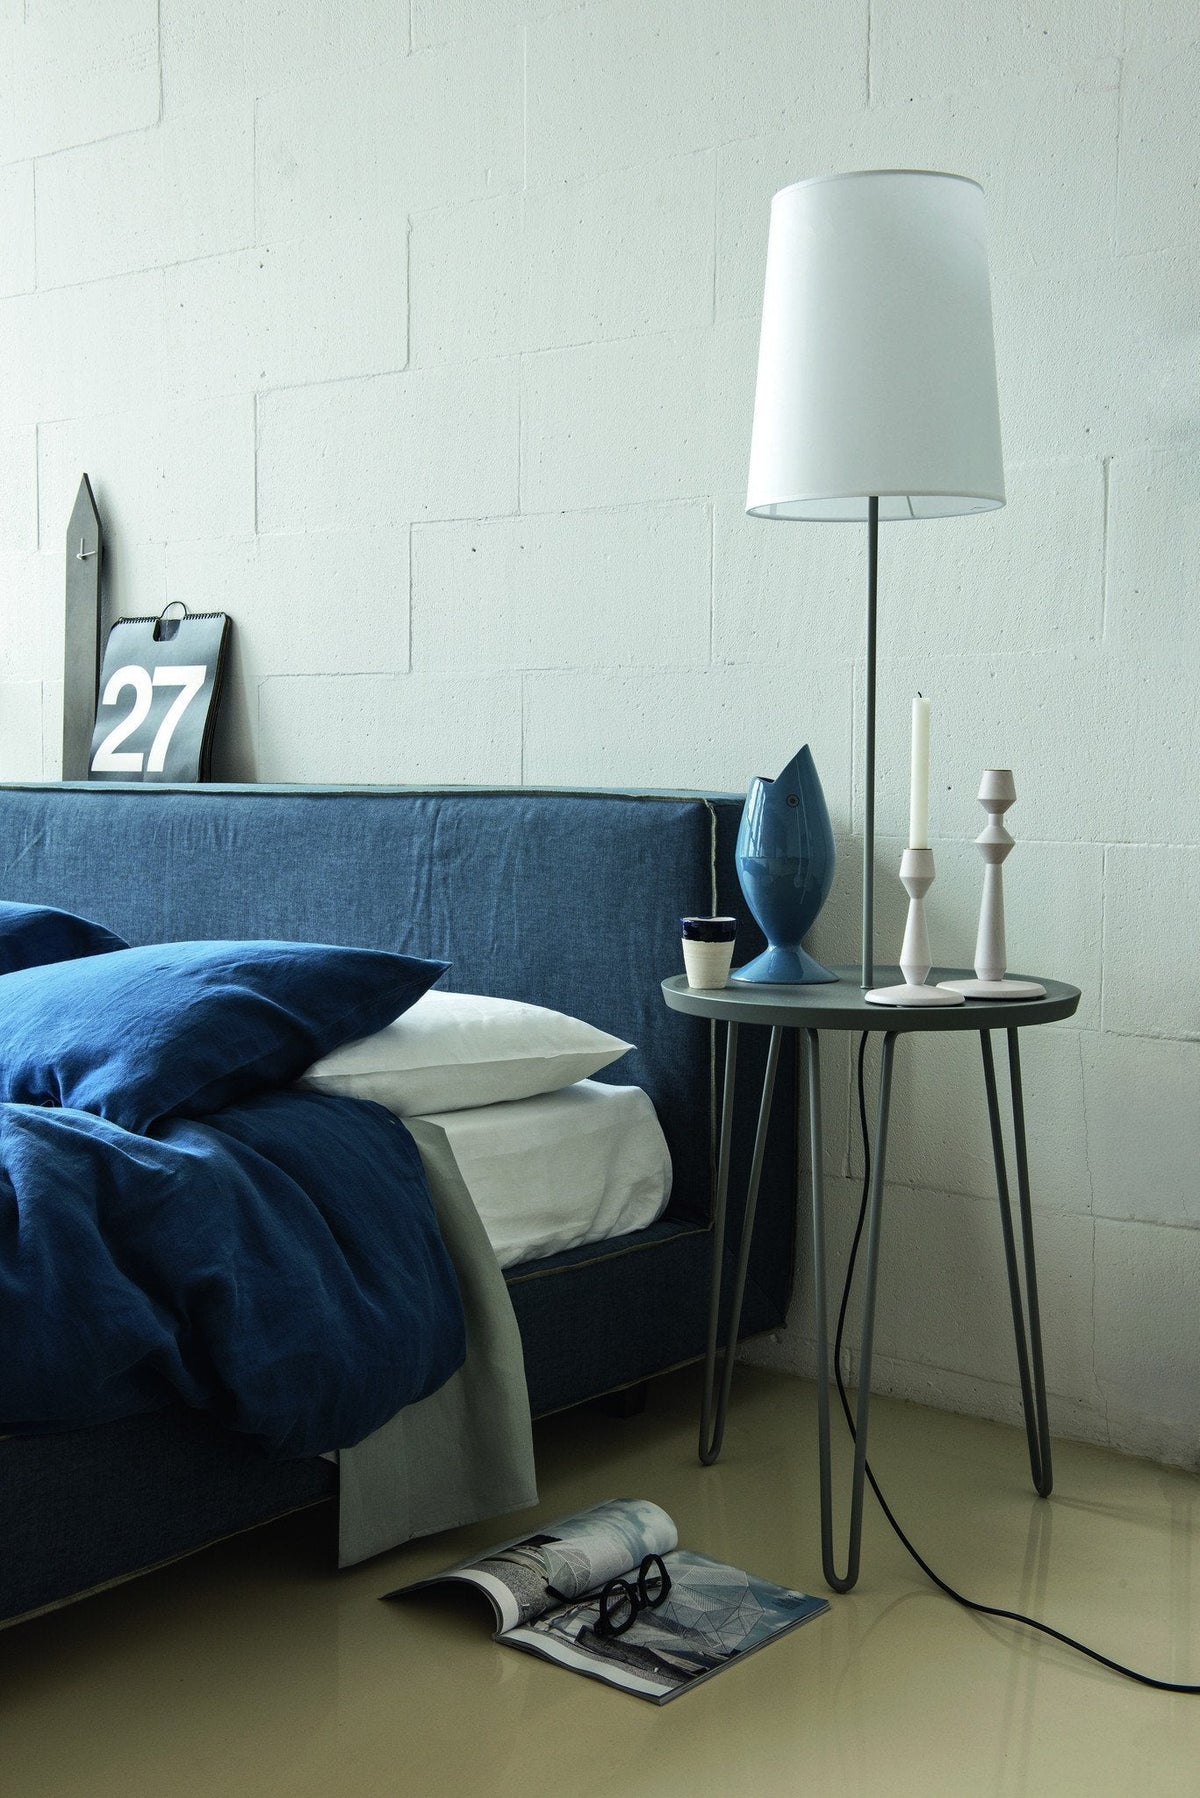 Molton Double Bed-Letti &amp; Co-Contract Furniture Store